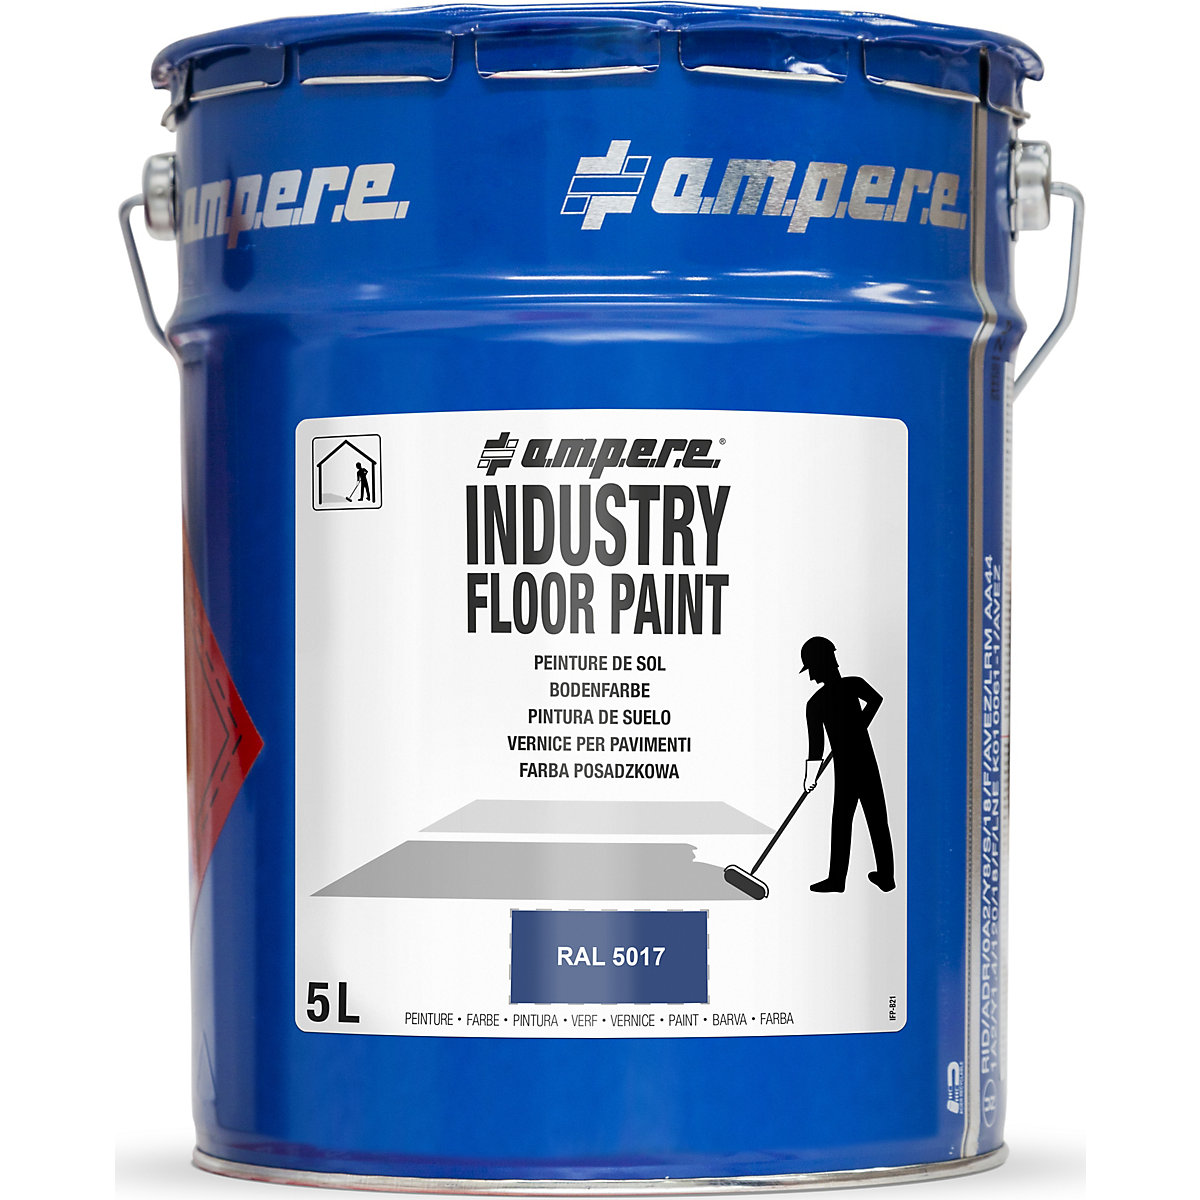 Tinta de marcação para pavimentos Industry Floor Paint® - Ampere